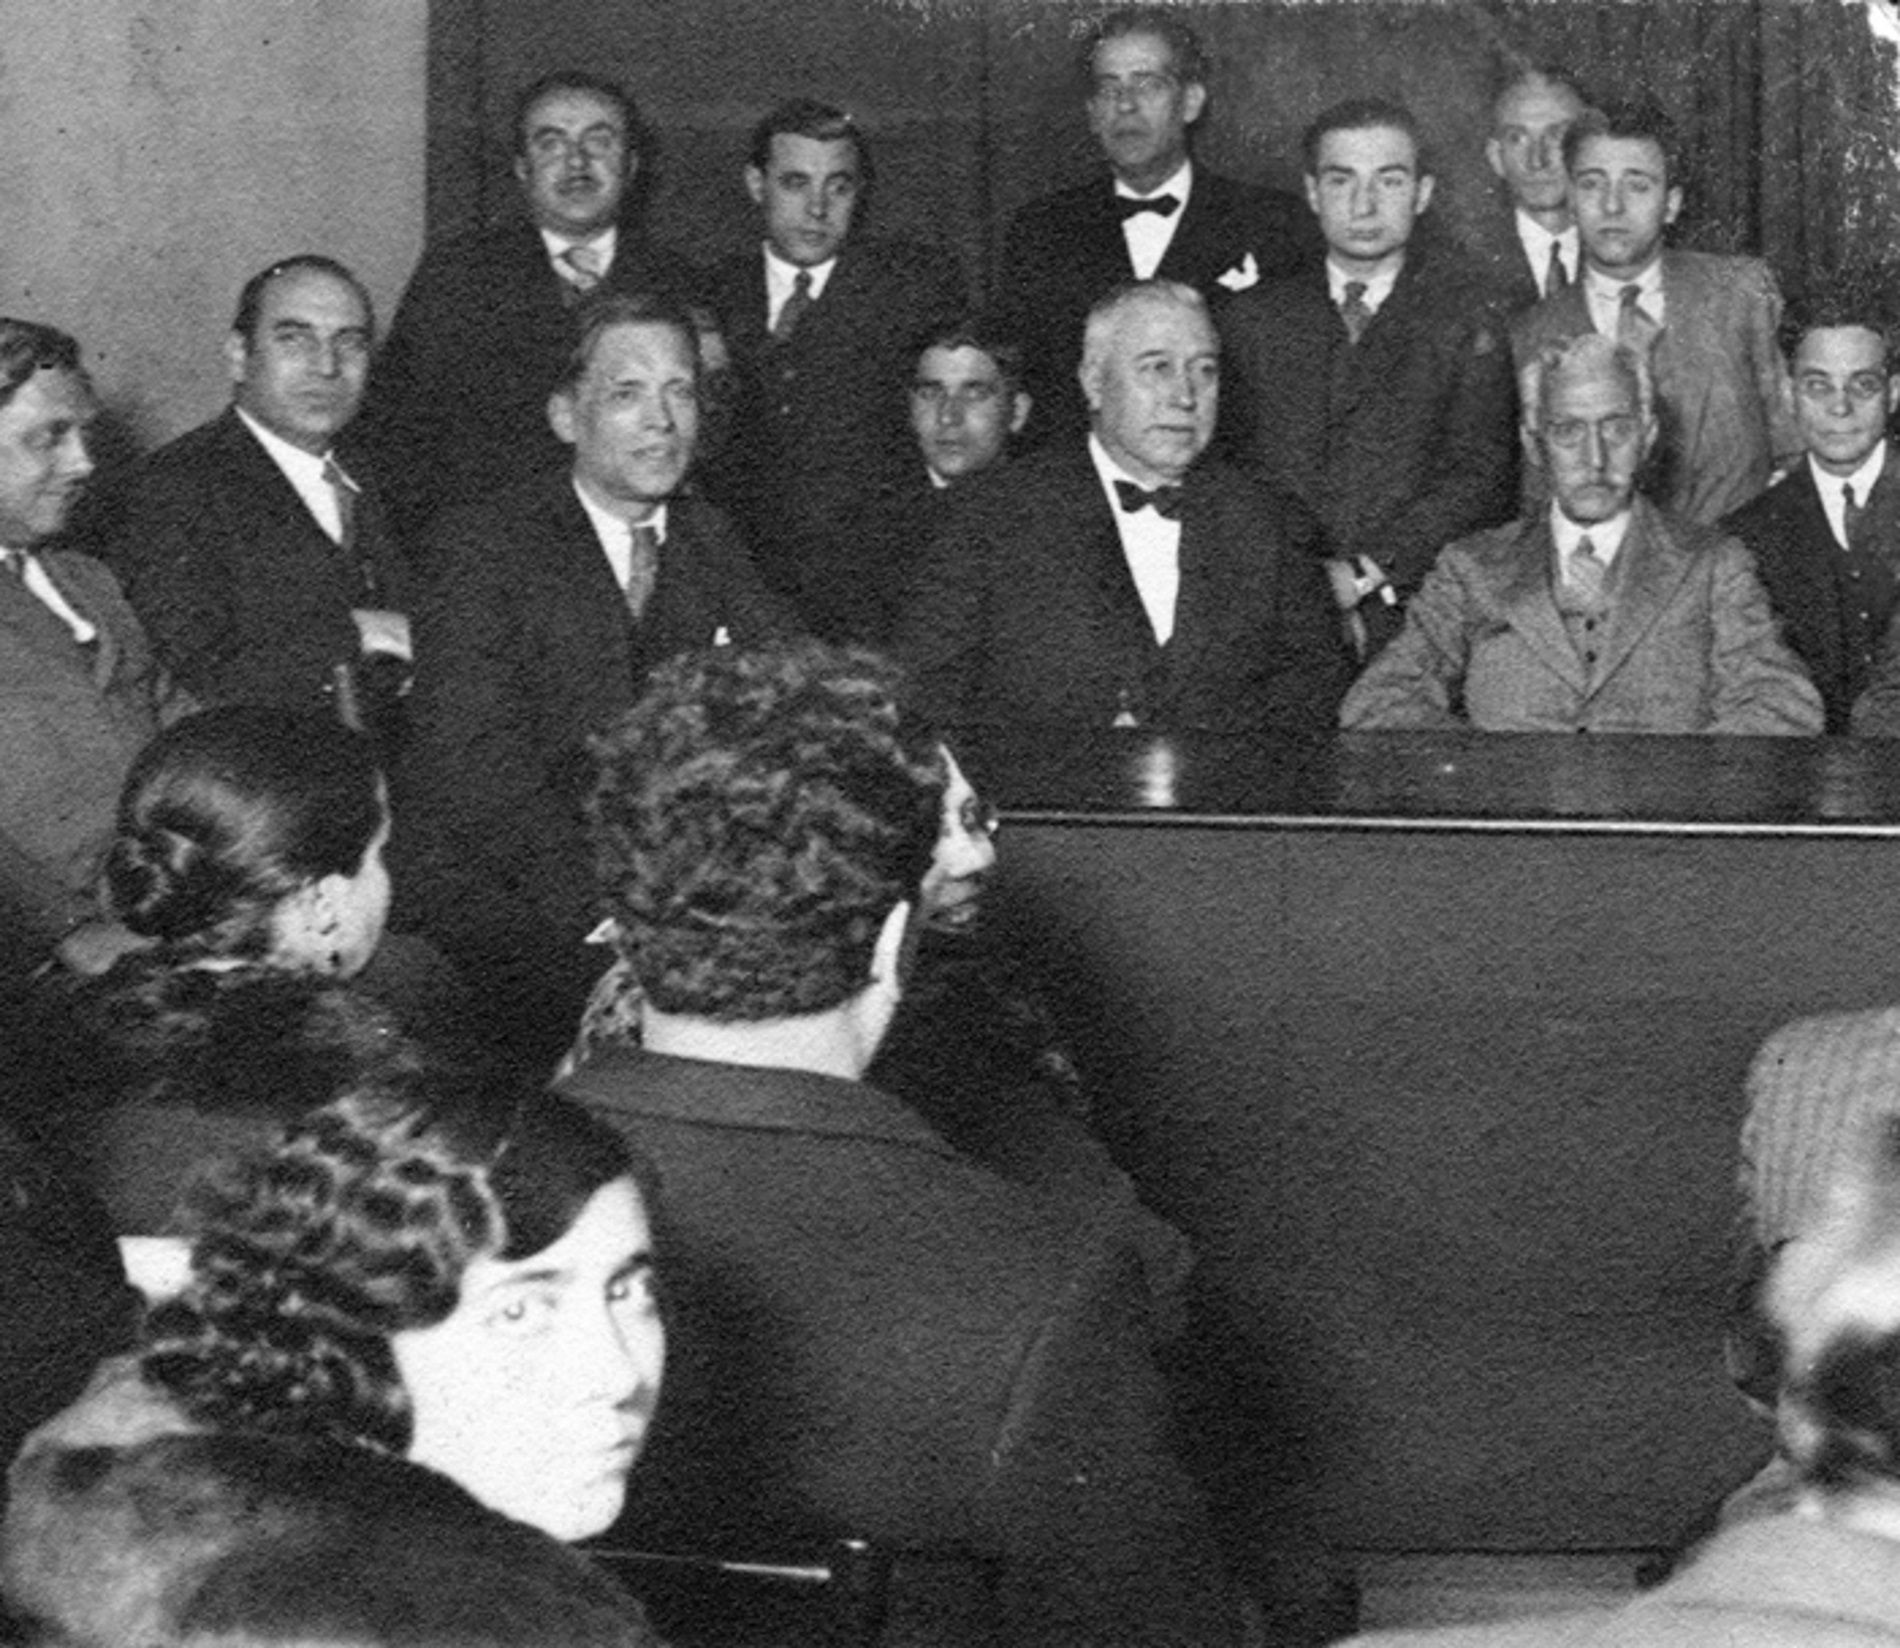 Macià, Companys and Mas. Catalonia on trial